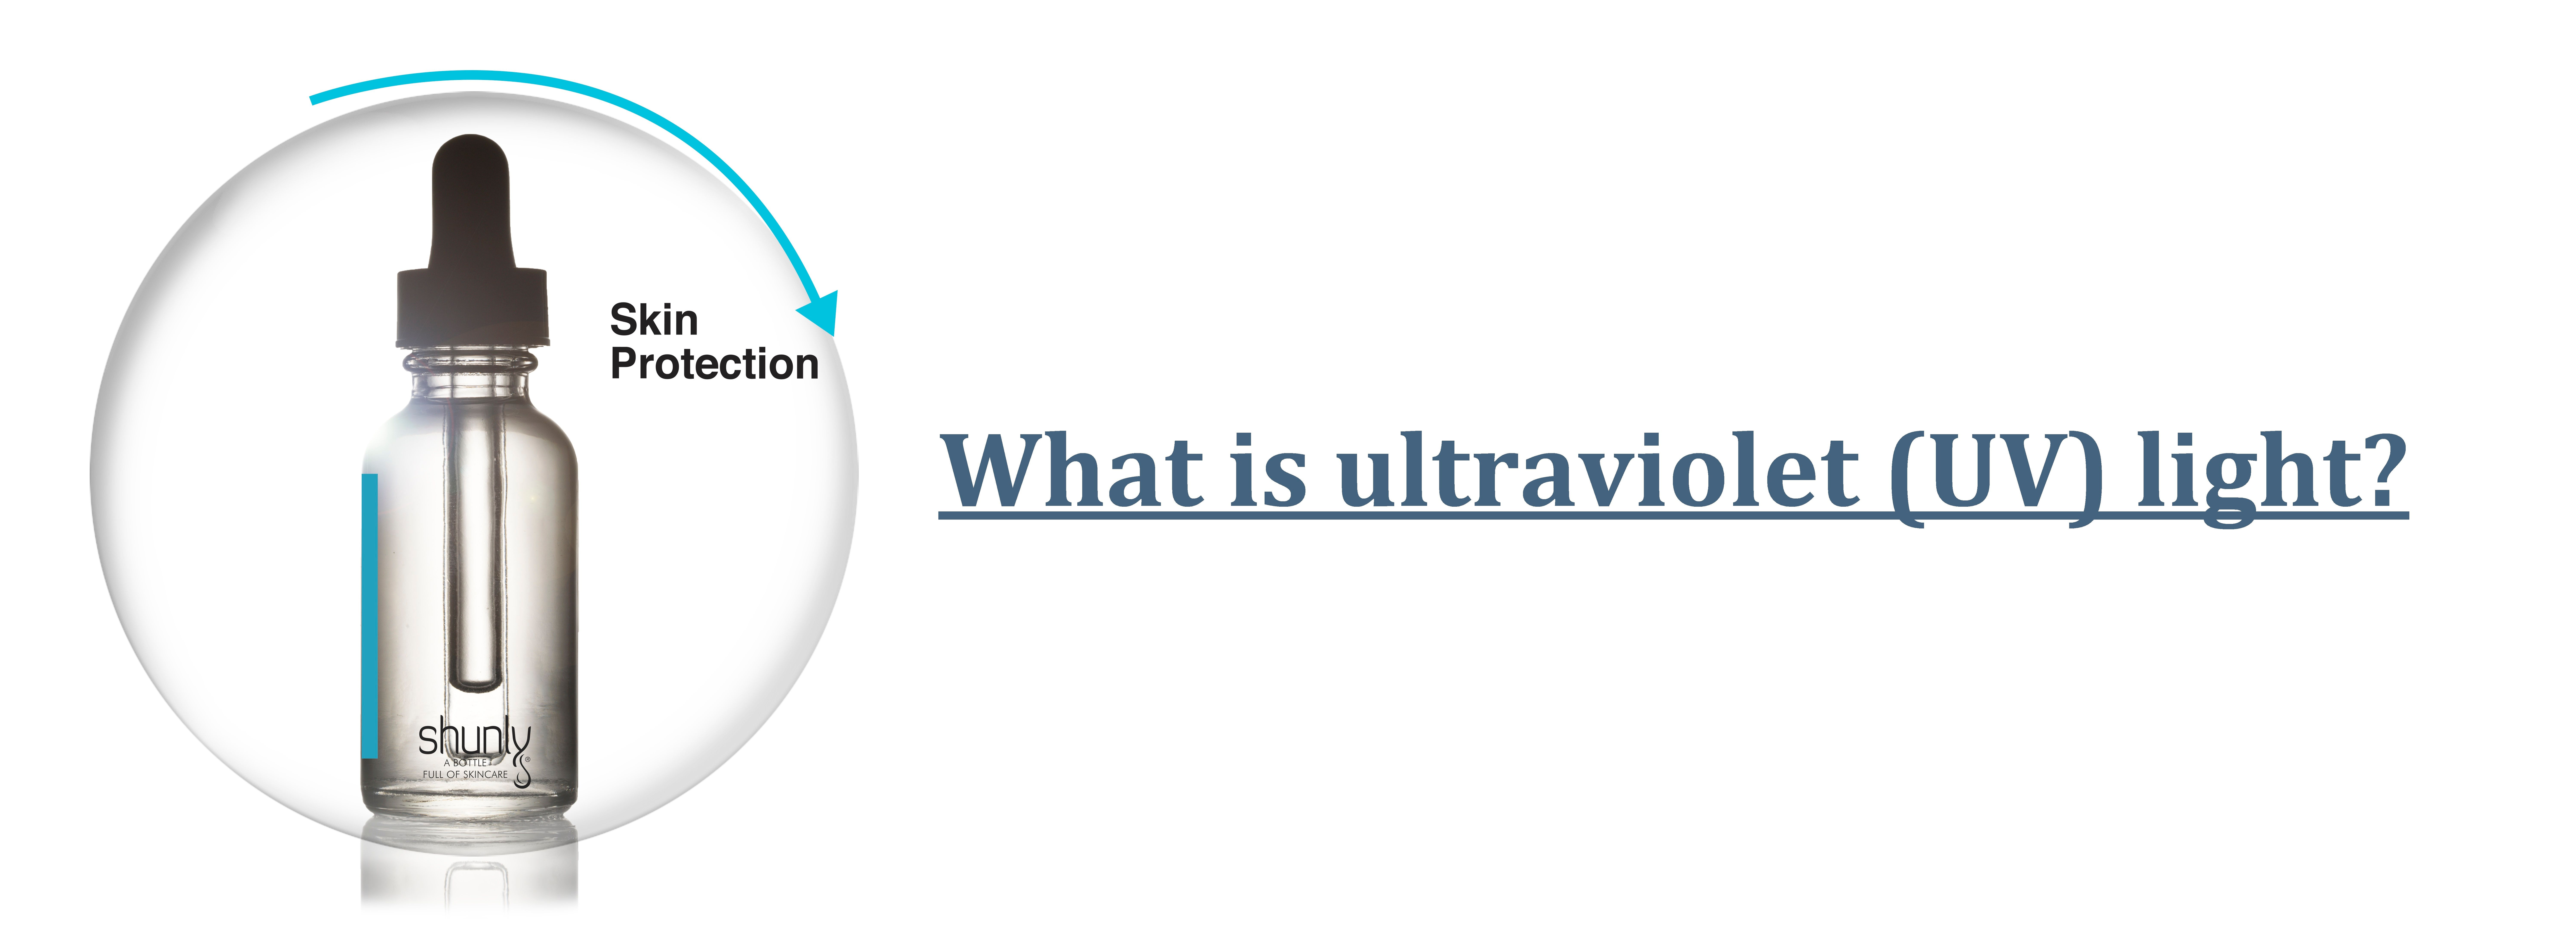 What is ultraviolet (UV) light?